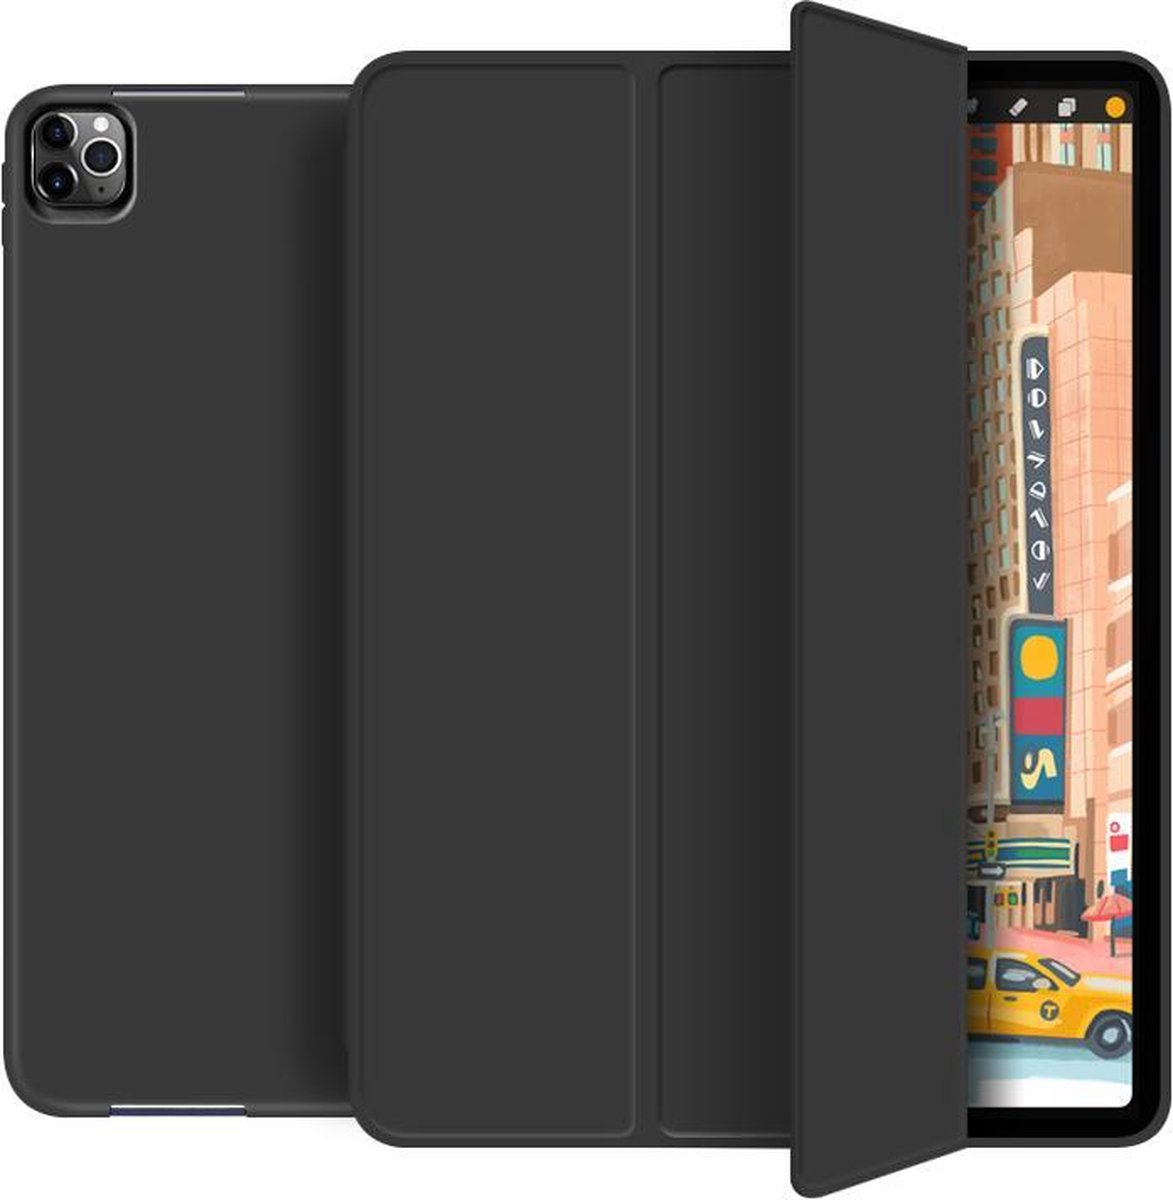 Ipad pro 2020 softcover - 11 inch – Ipad hoes – soft cover – Hoes voor iPad – Tablet beschermer - zwart